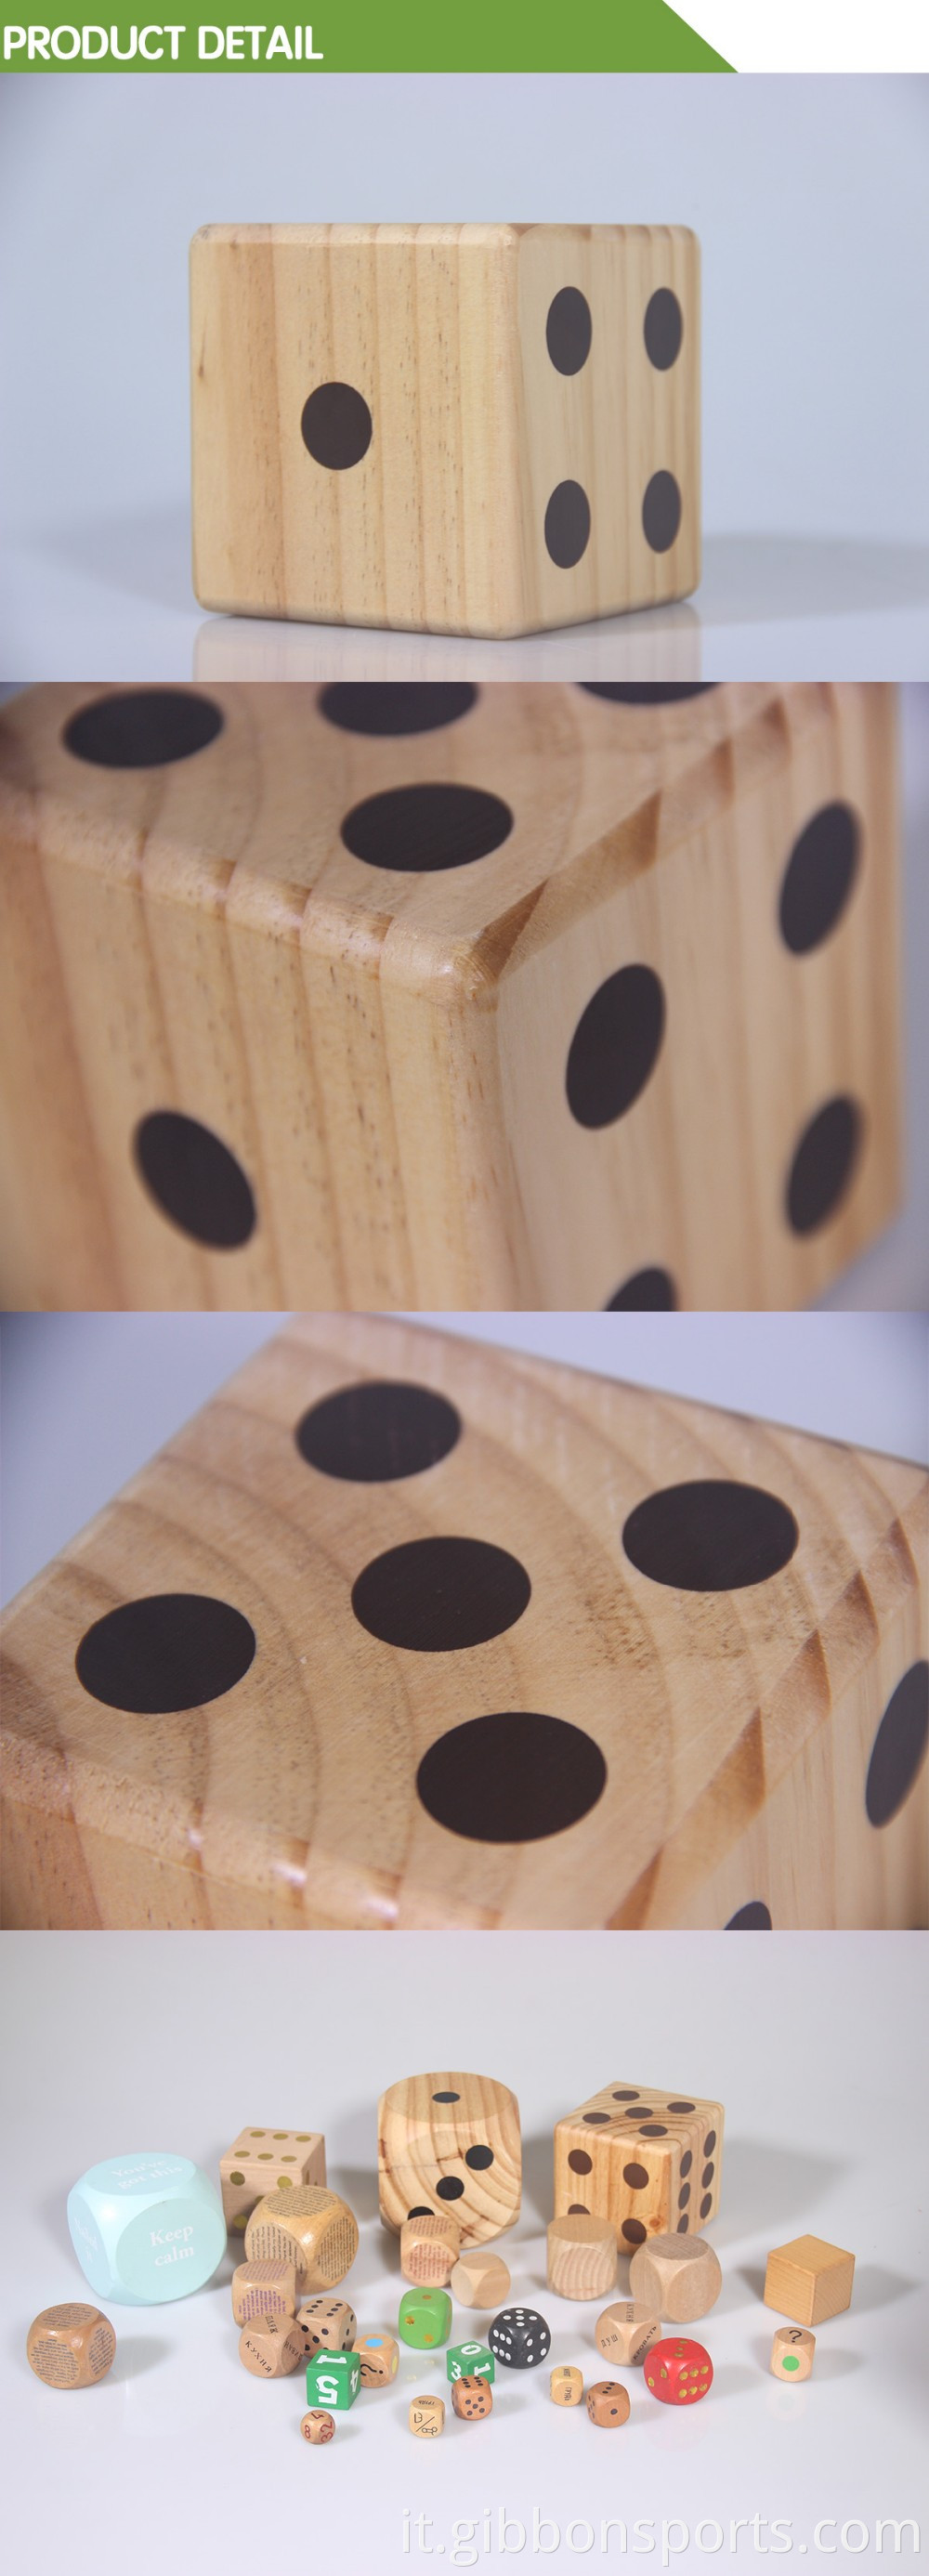 wooden yard dice